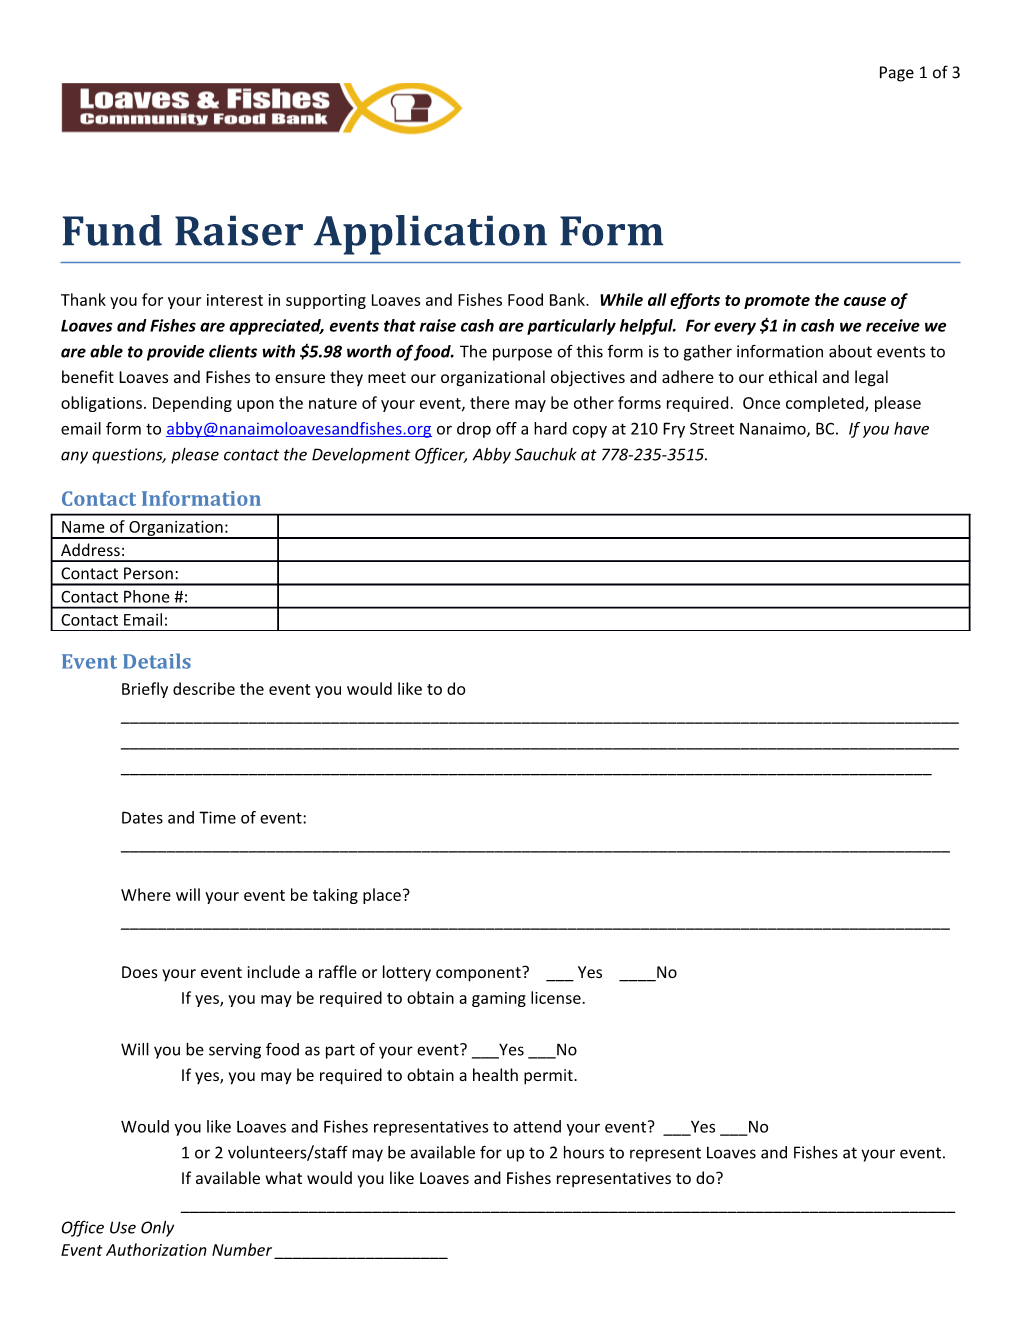 Fund Raiser Application Form